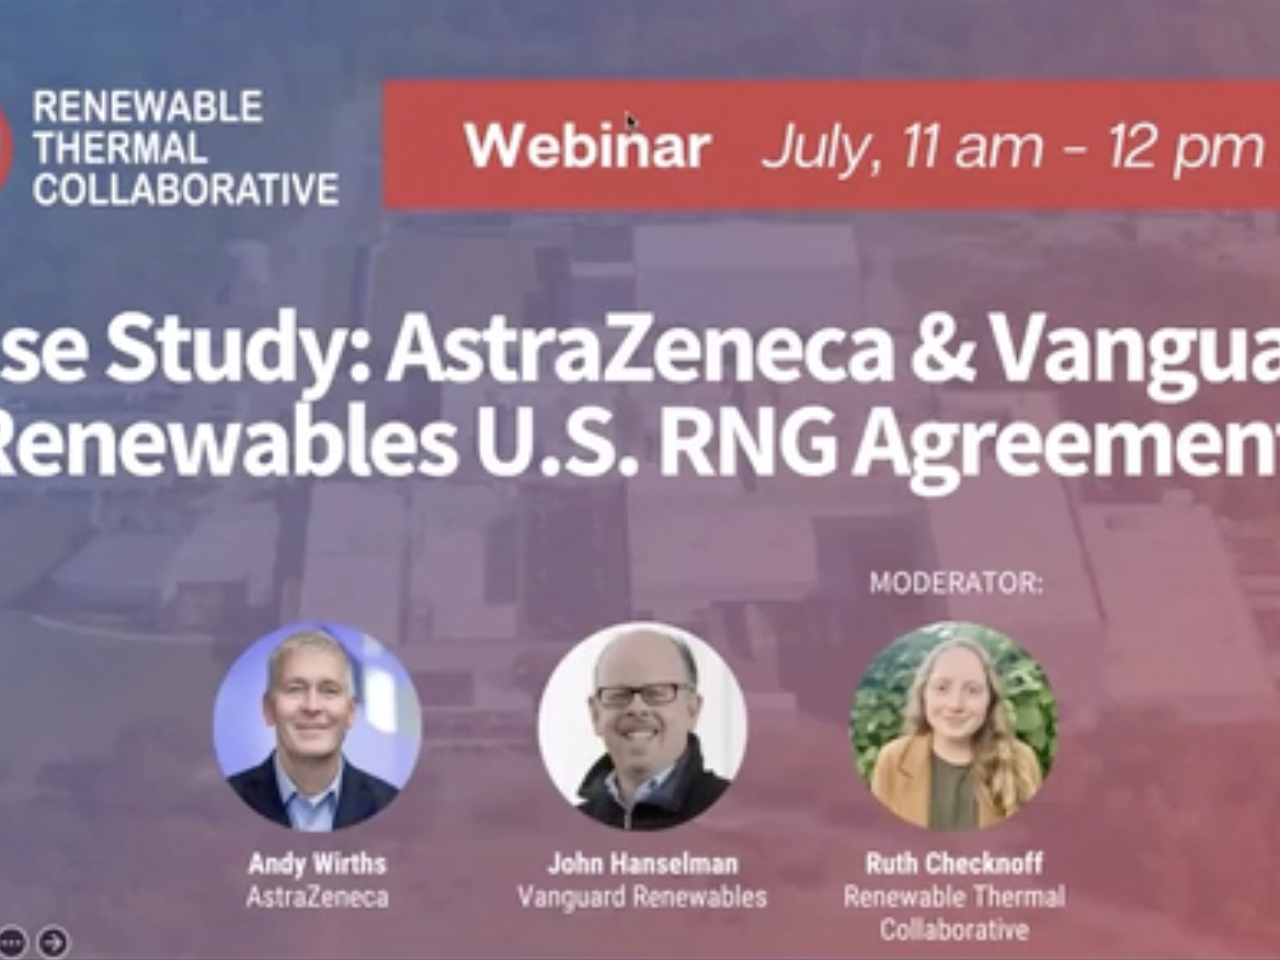 "Case Study: AstraZeneca & Vanguard Renewables U.S. RNG Agreement"